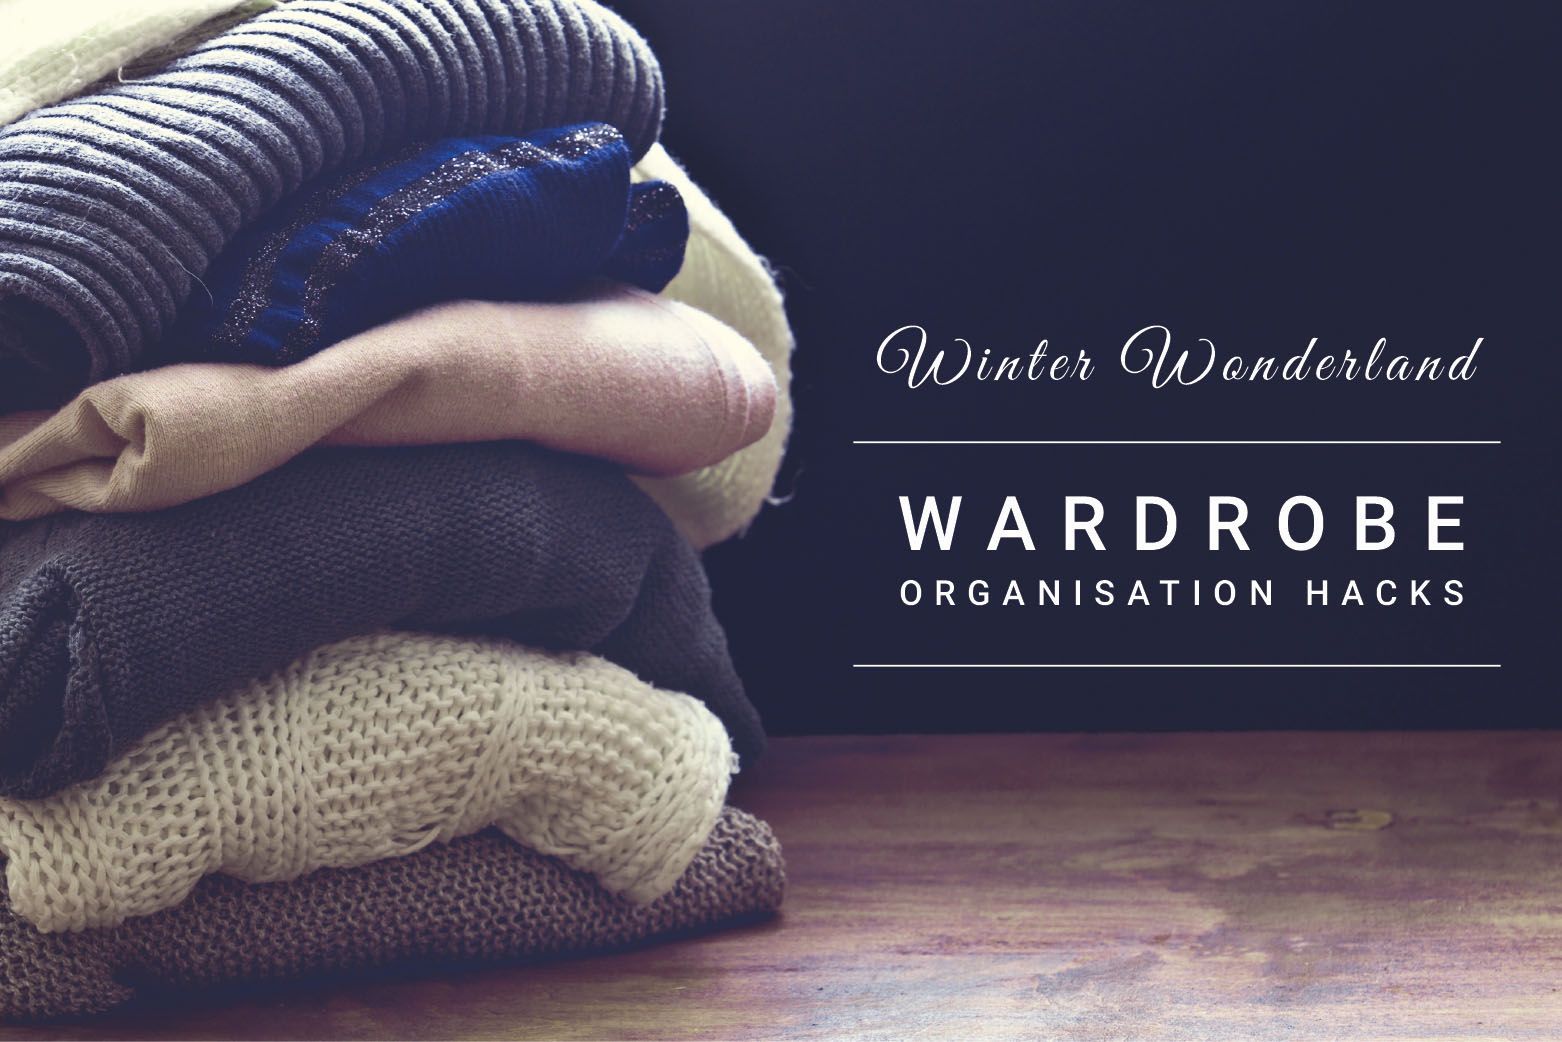 Winter wardrobe organisation blog cover